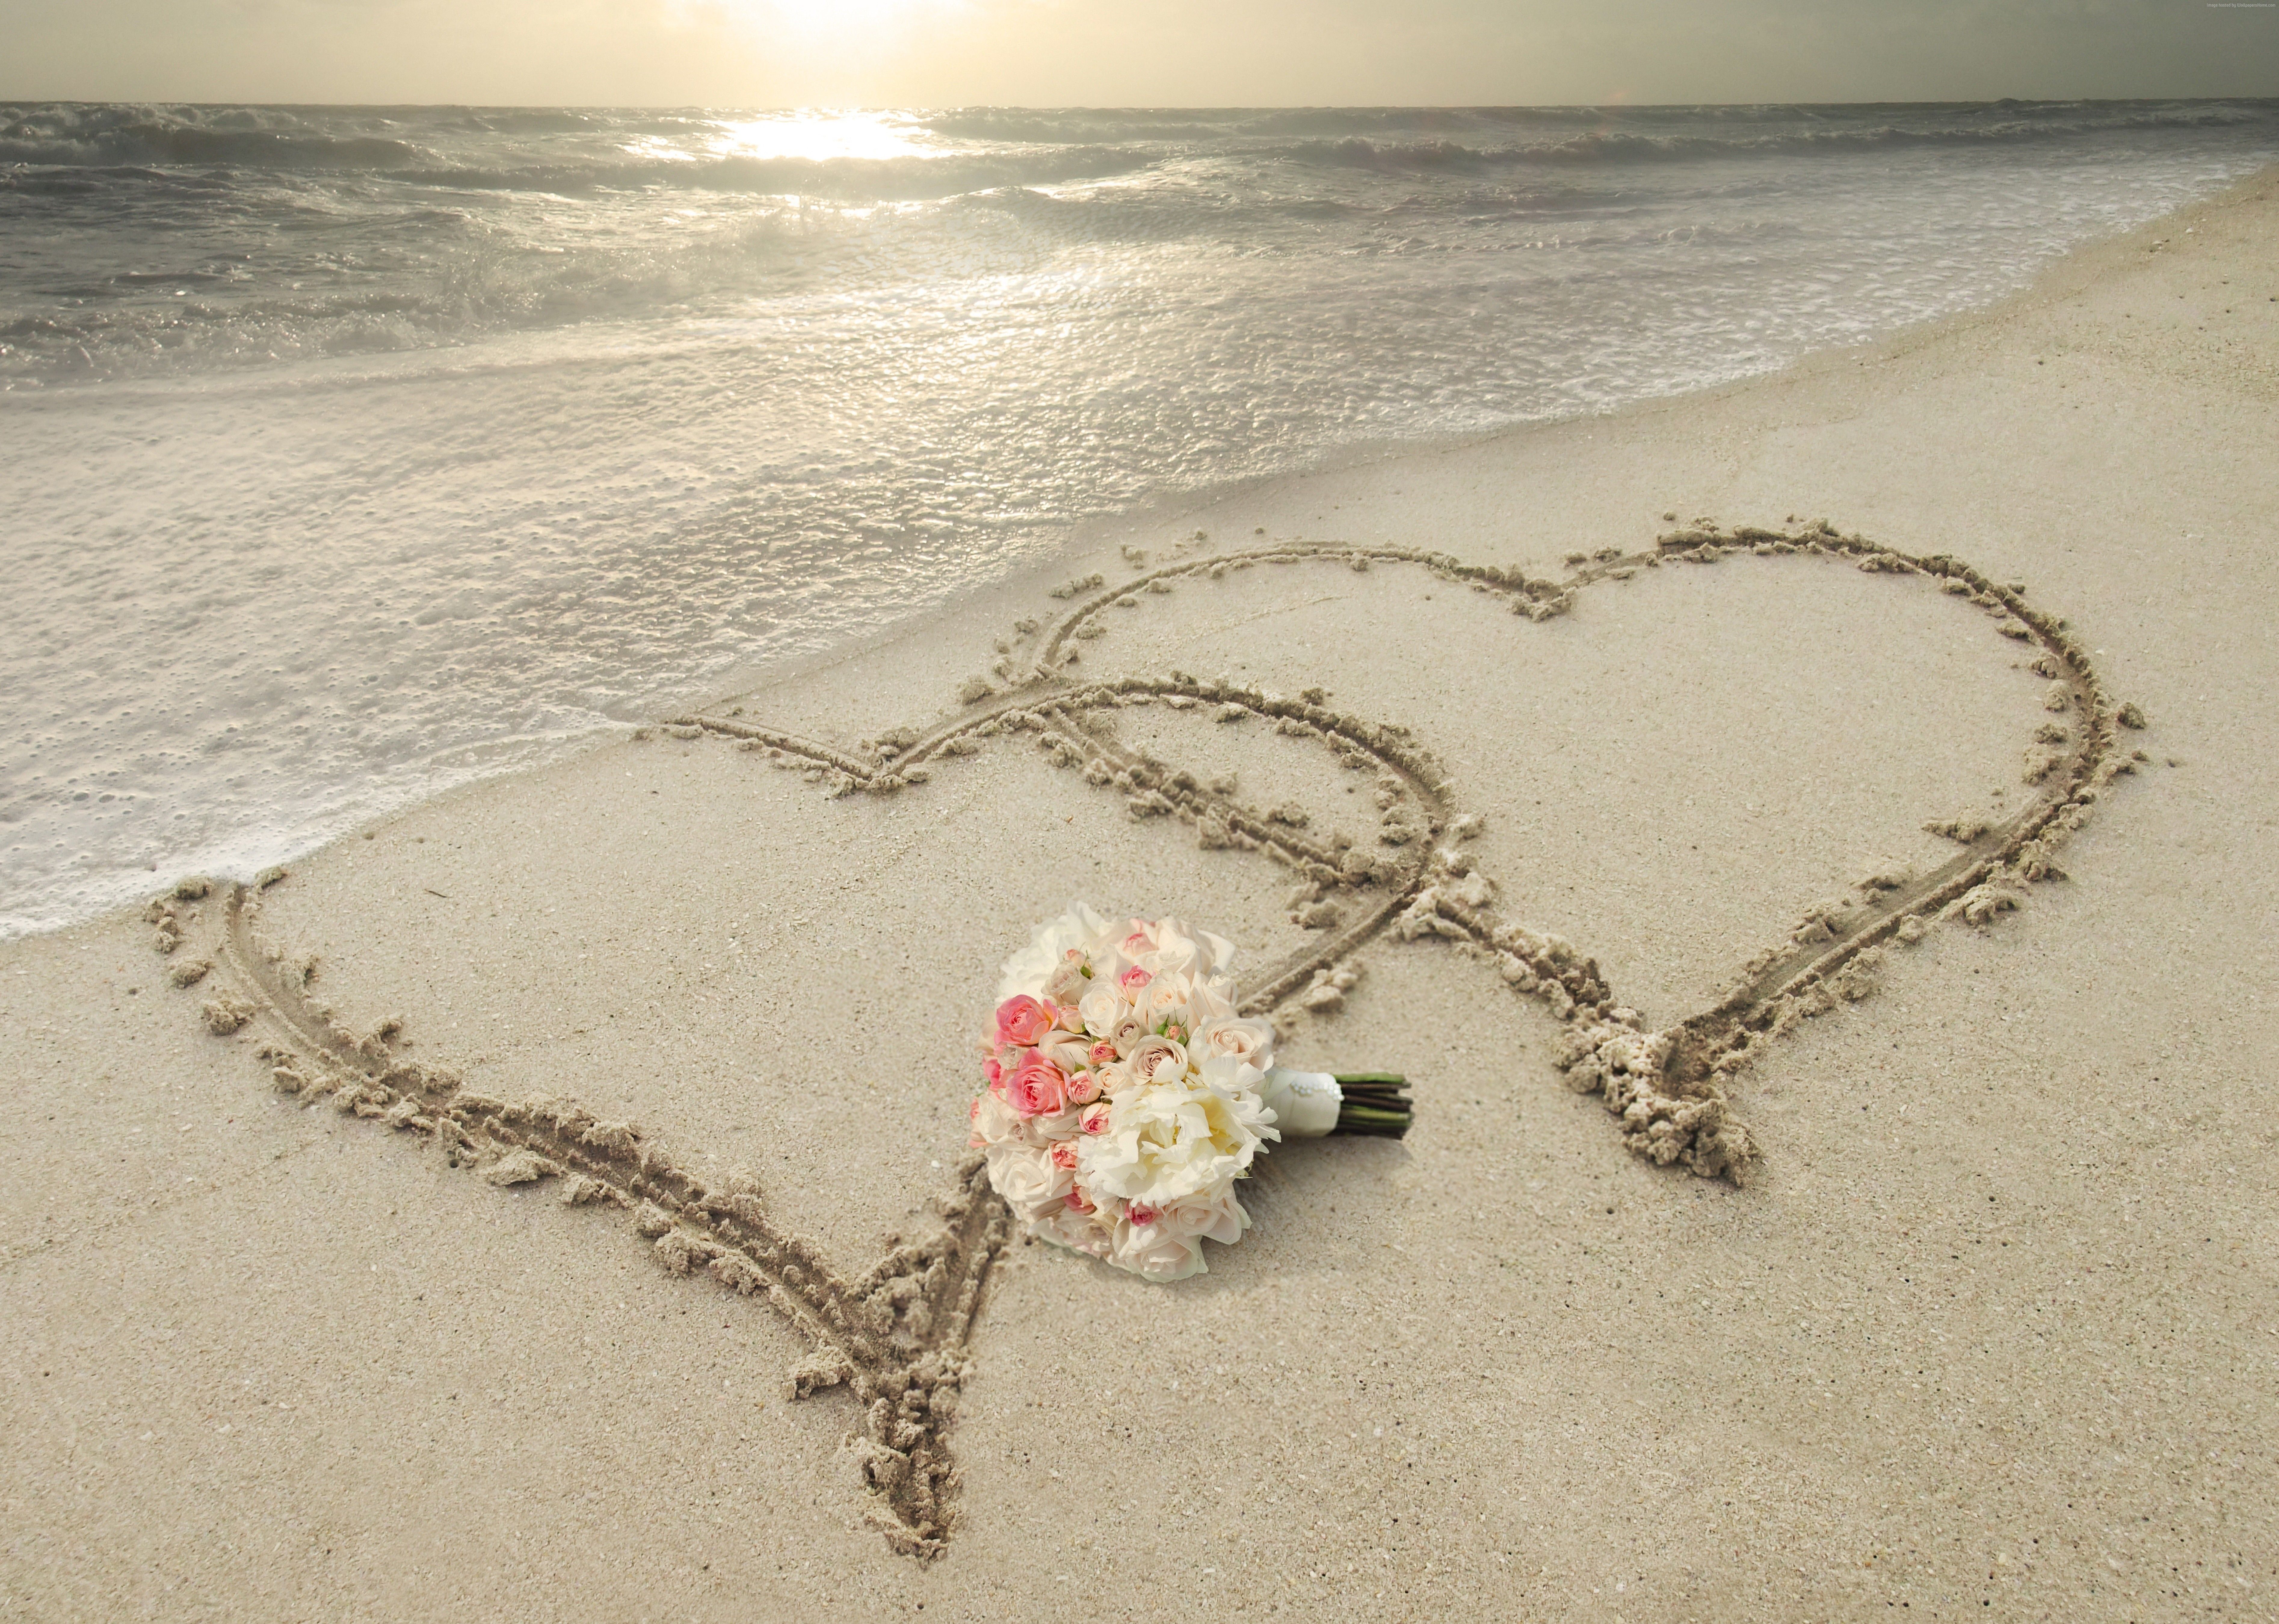 #love image, #beach, #heart, k. Stock Image wallpaper